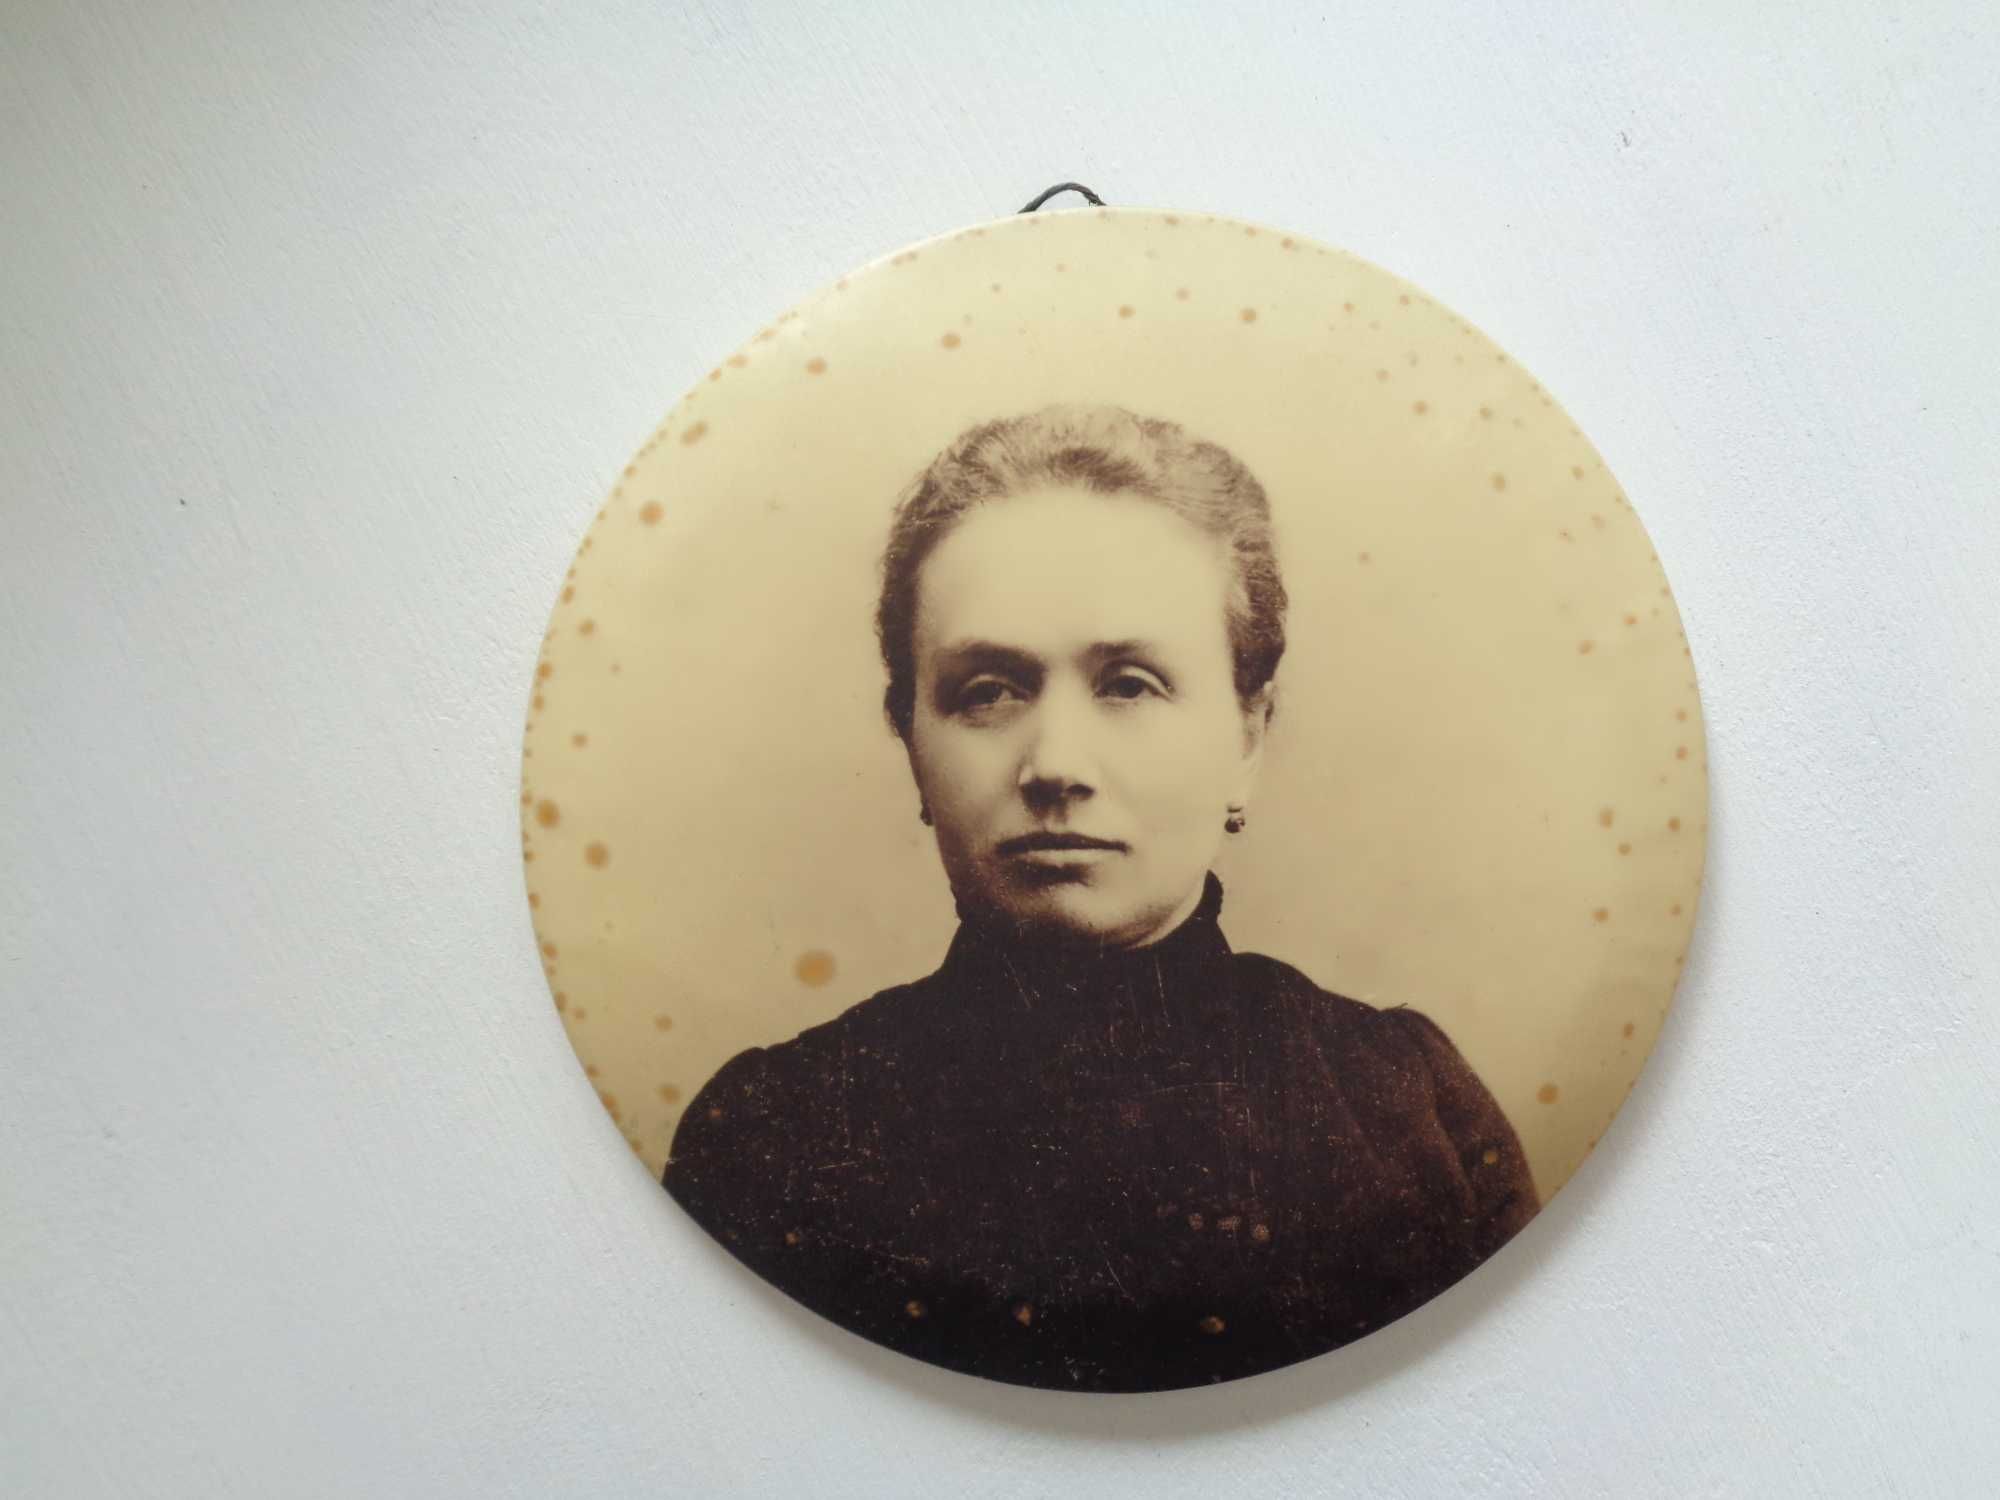 Portret mlodej kobiety - stara okragla fotografia na blasze - 15,3 cm